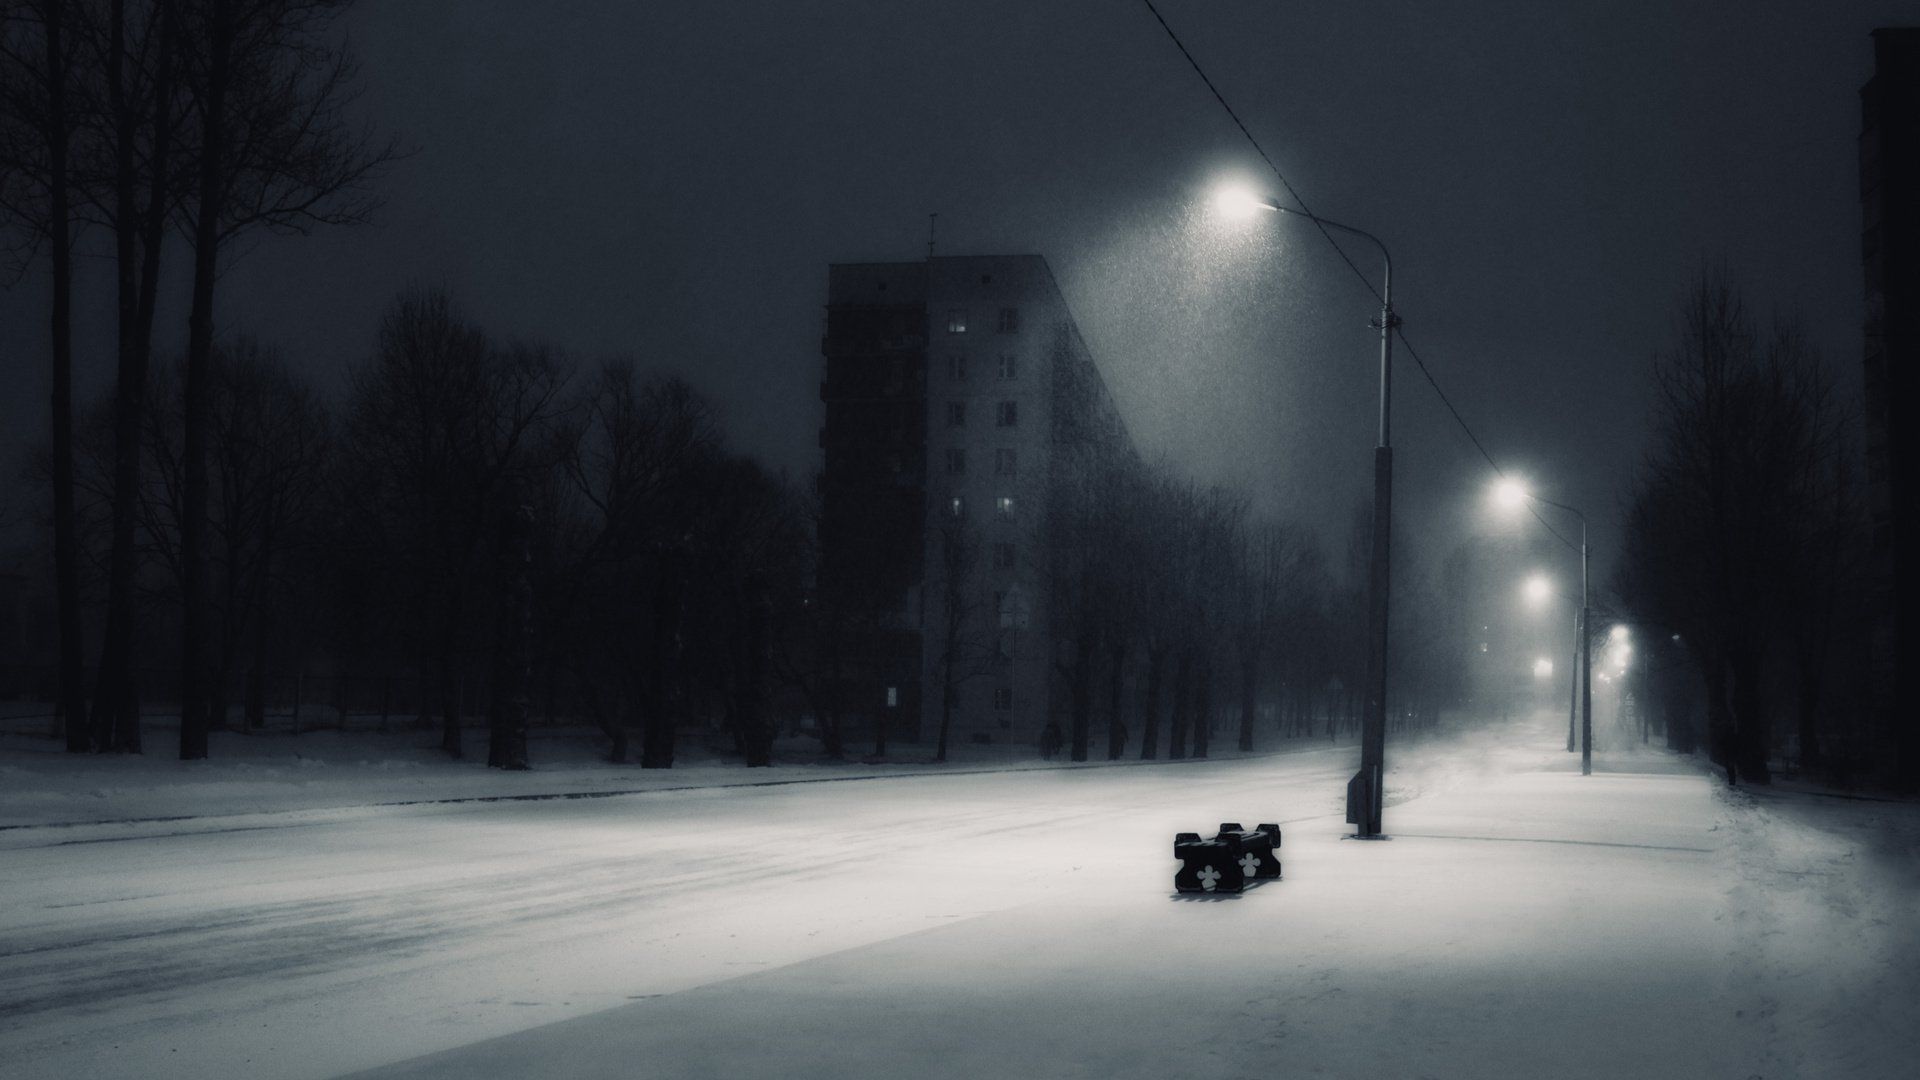 Night City Snow Bench Street Light Russia Monochrome Gray Winter Depressing Snowing Wallpaper:1920x1080